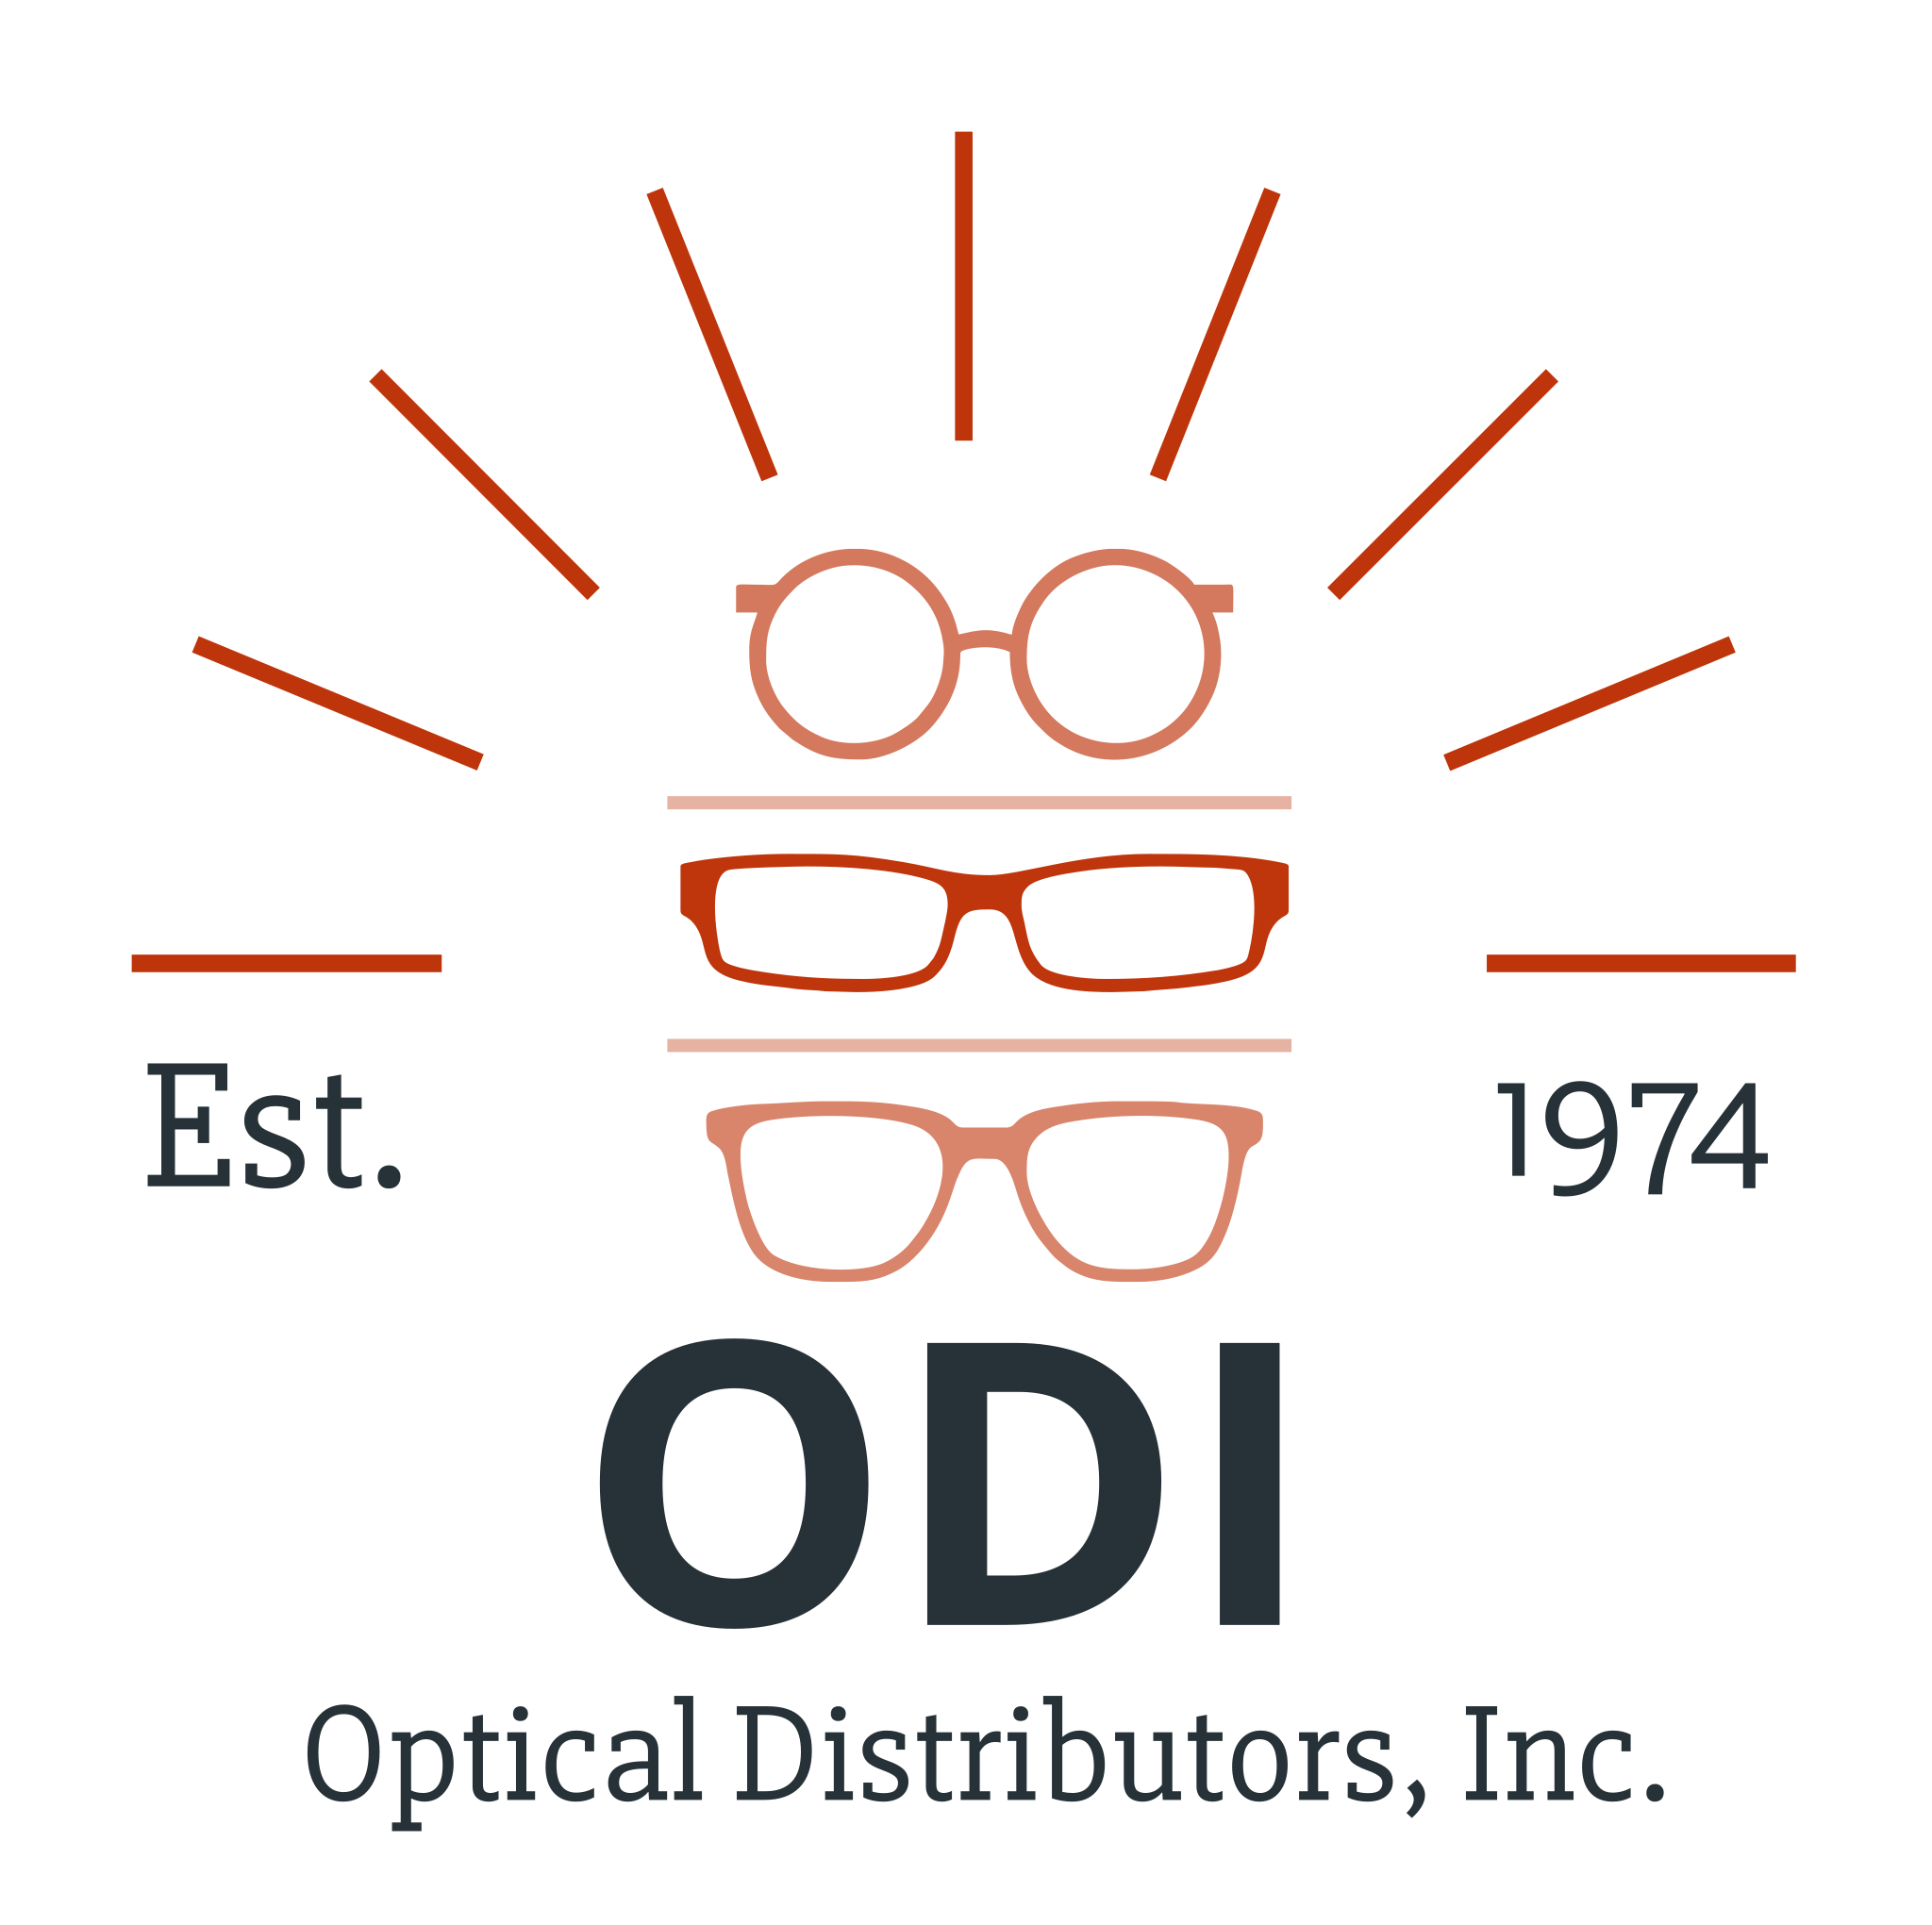 Welcome to Optical Distributors, Inc.